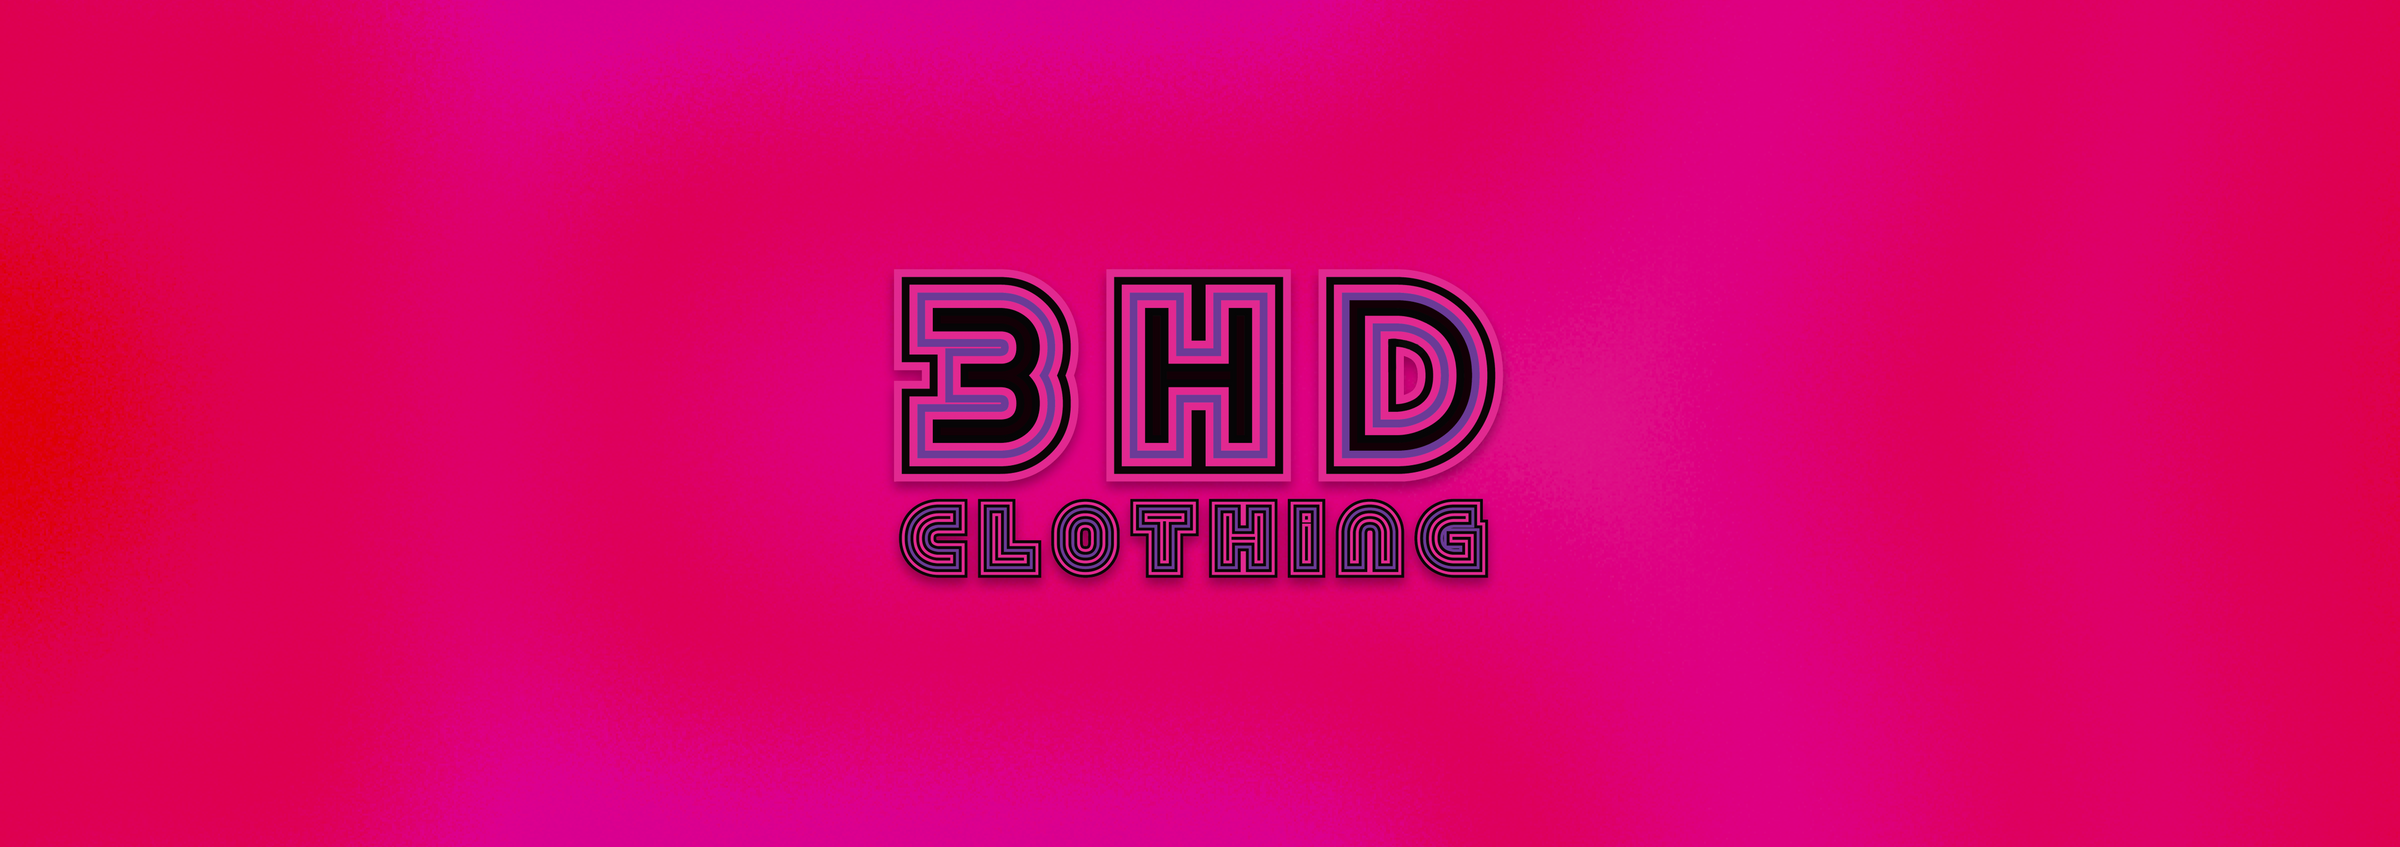 3HD Clothing